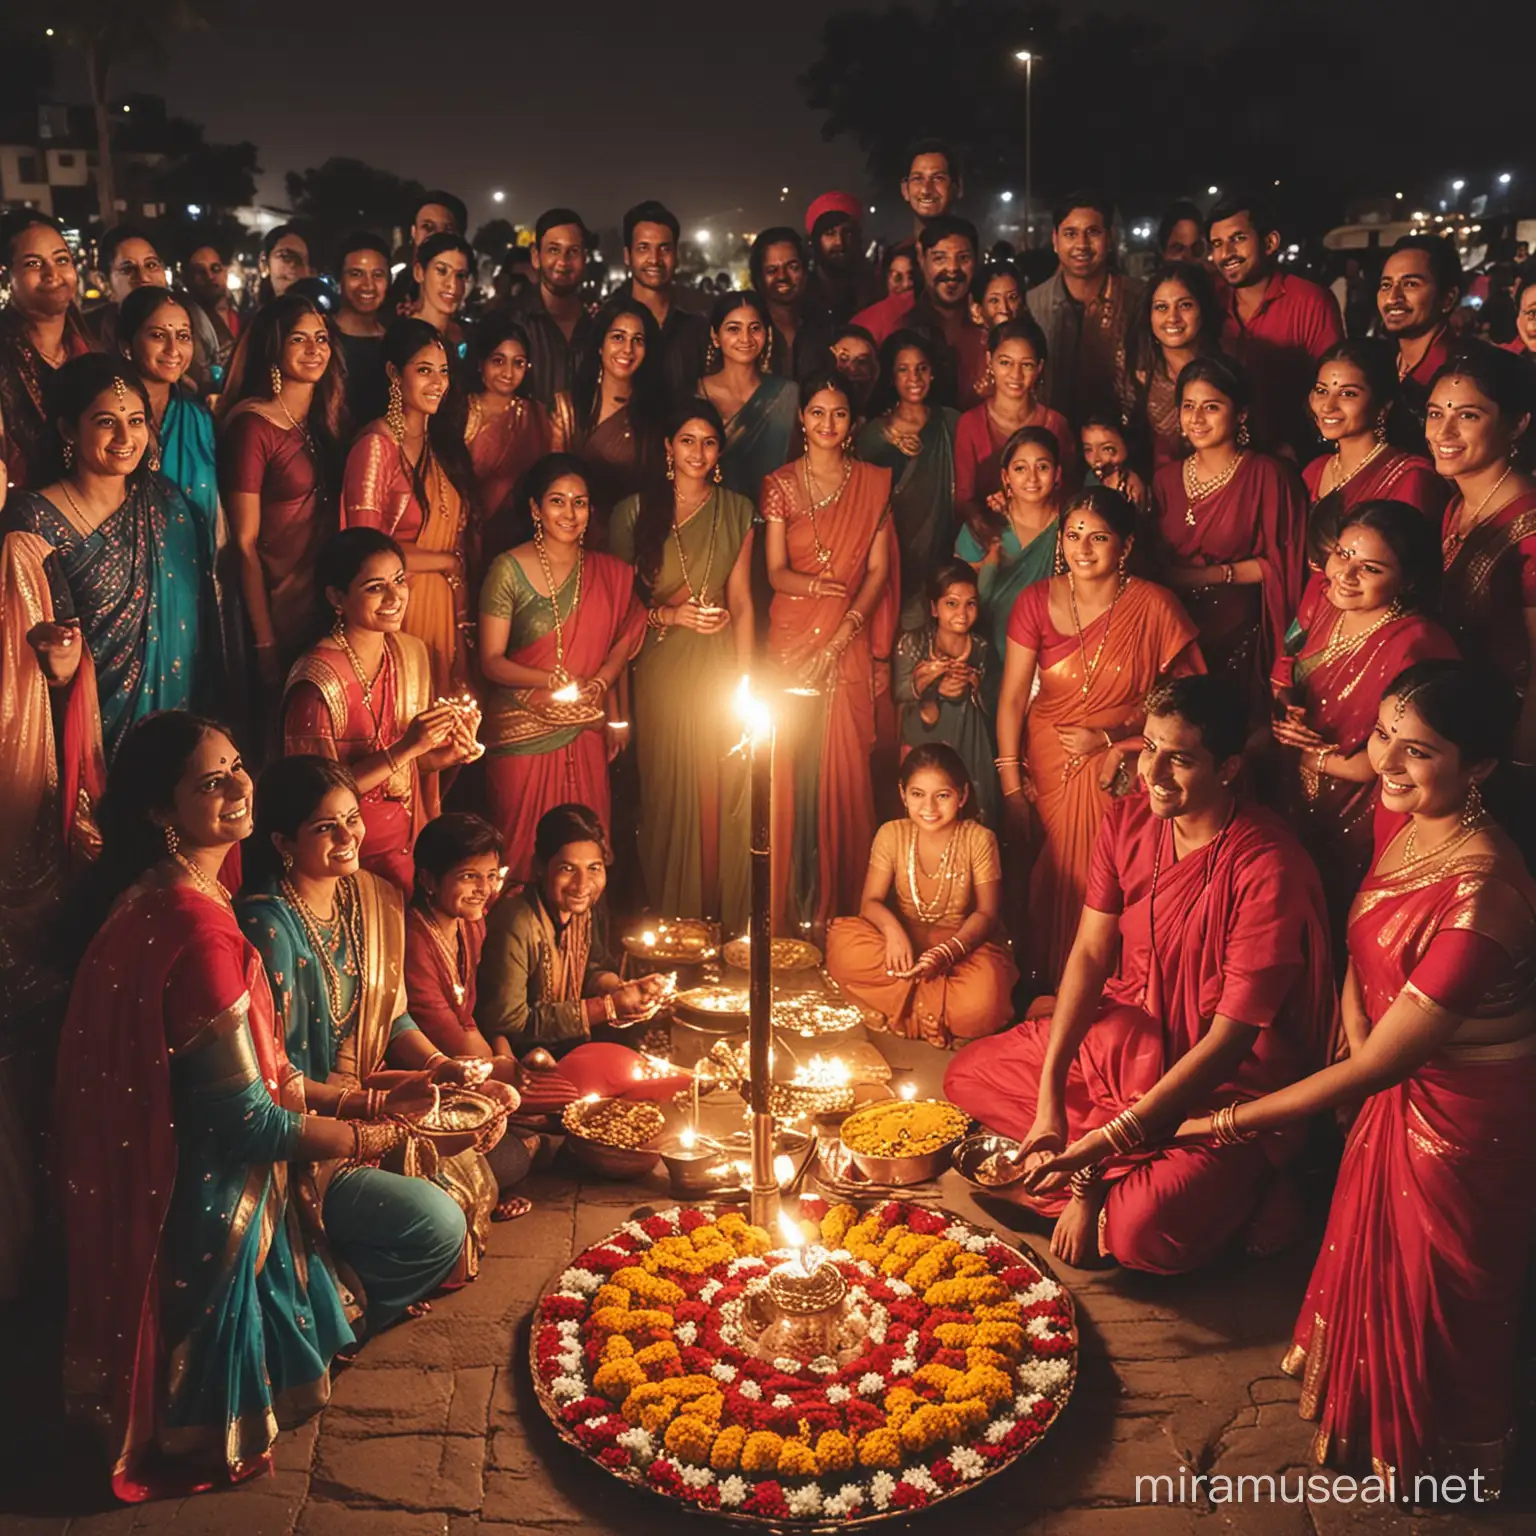 community celebrating Diwali

